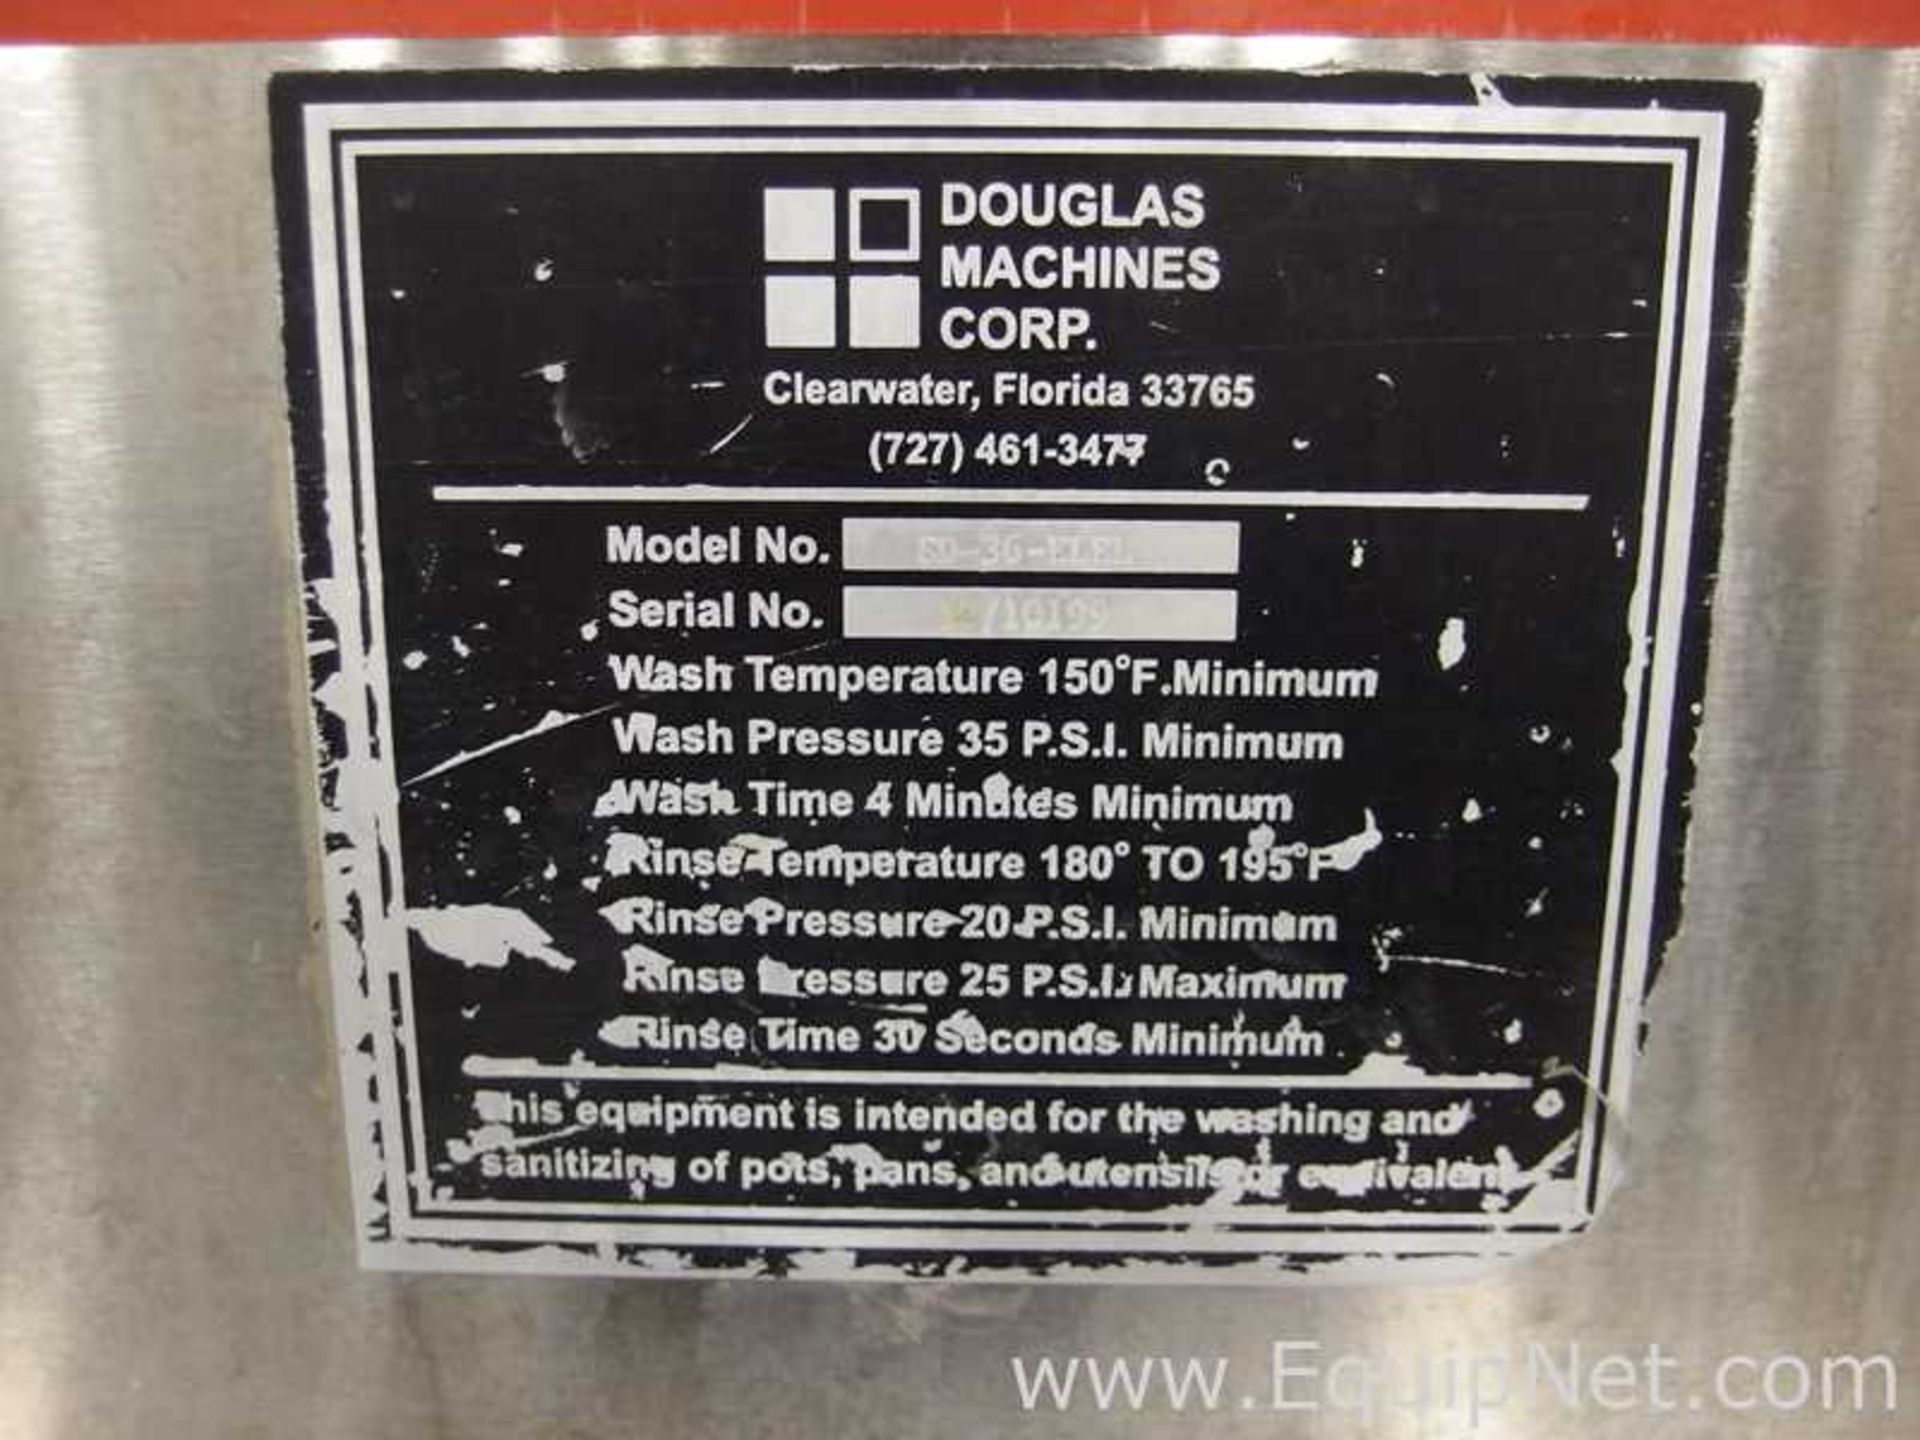 Douglas Machines Corp SD-36-ELEL Pot Pan Utensil Washer - Image 10 of 12